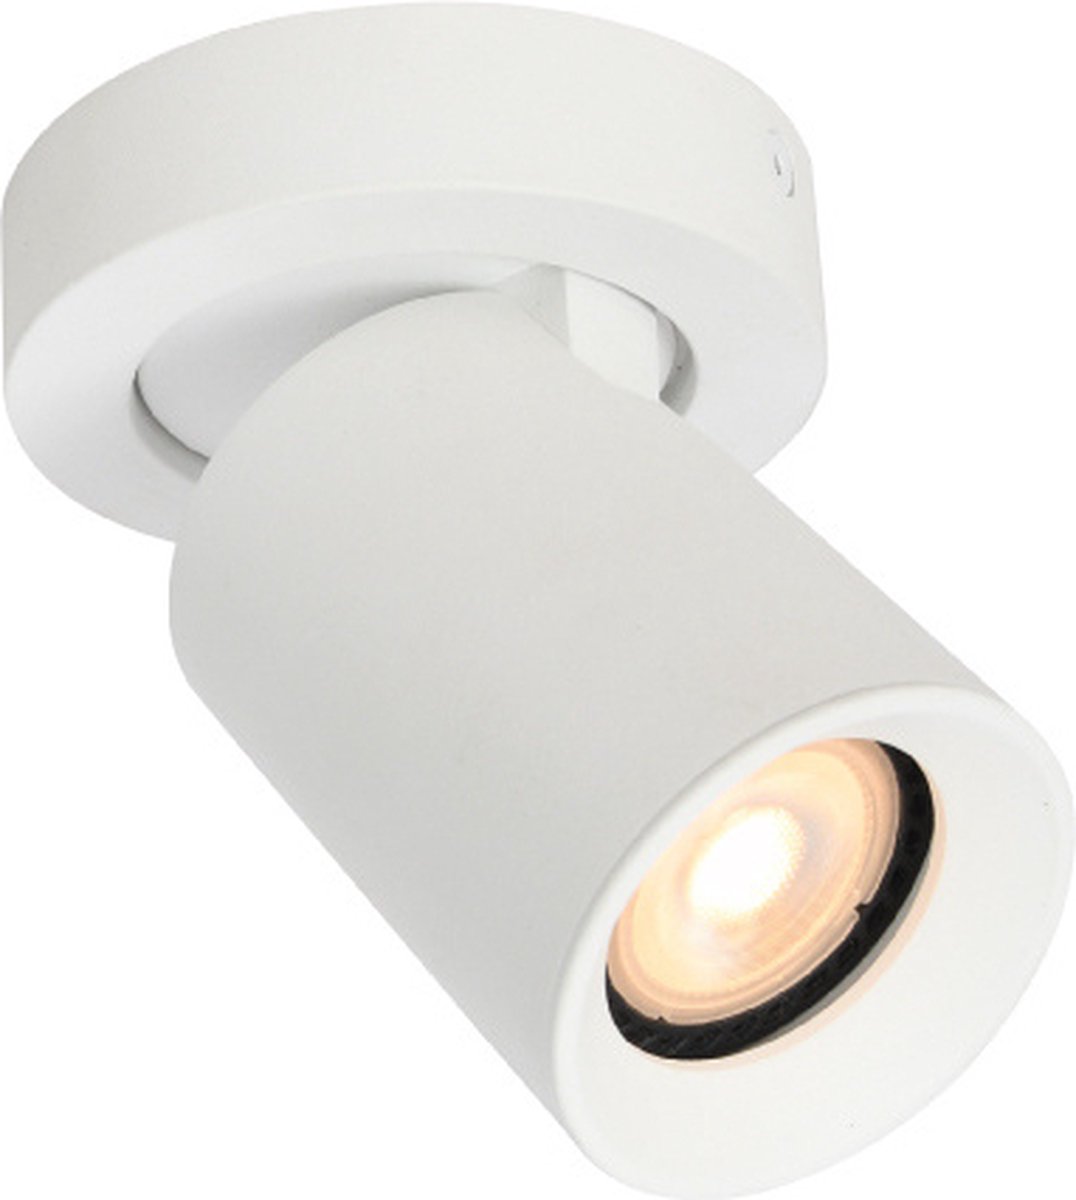 Plafondlamp Megano 1L Rond Wit - 1x GU10 LED 4,8W 2700K 355lm - IP20 - Dimbaar > spots verlichting led wit | opbouwspot led wit | plafondlamp wit | spotje led wit | led lamp wit